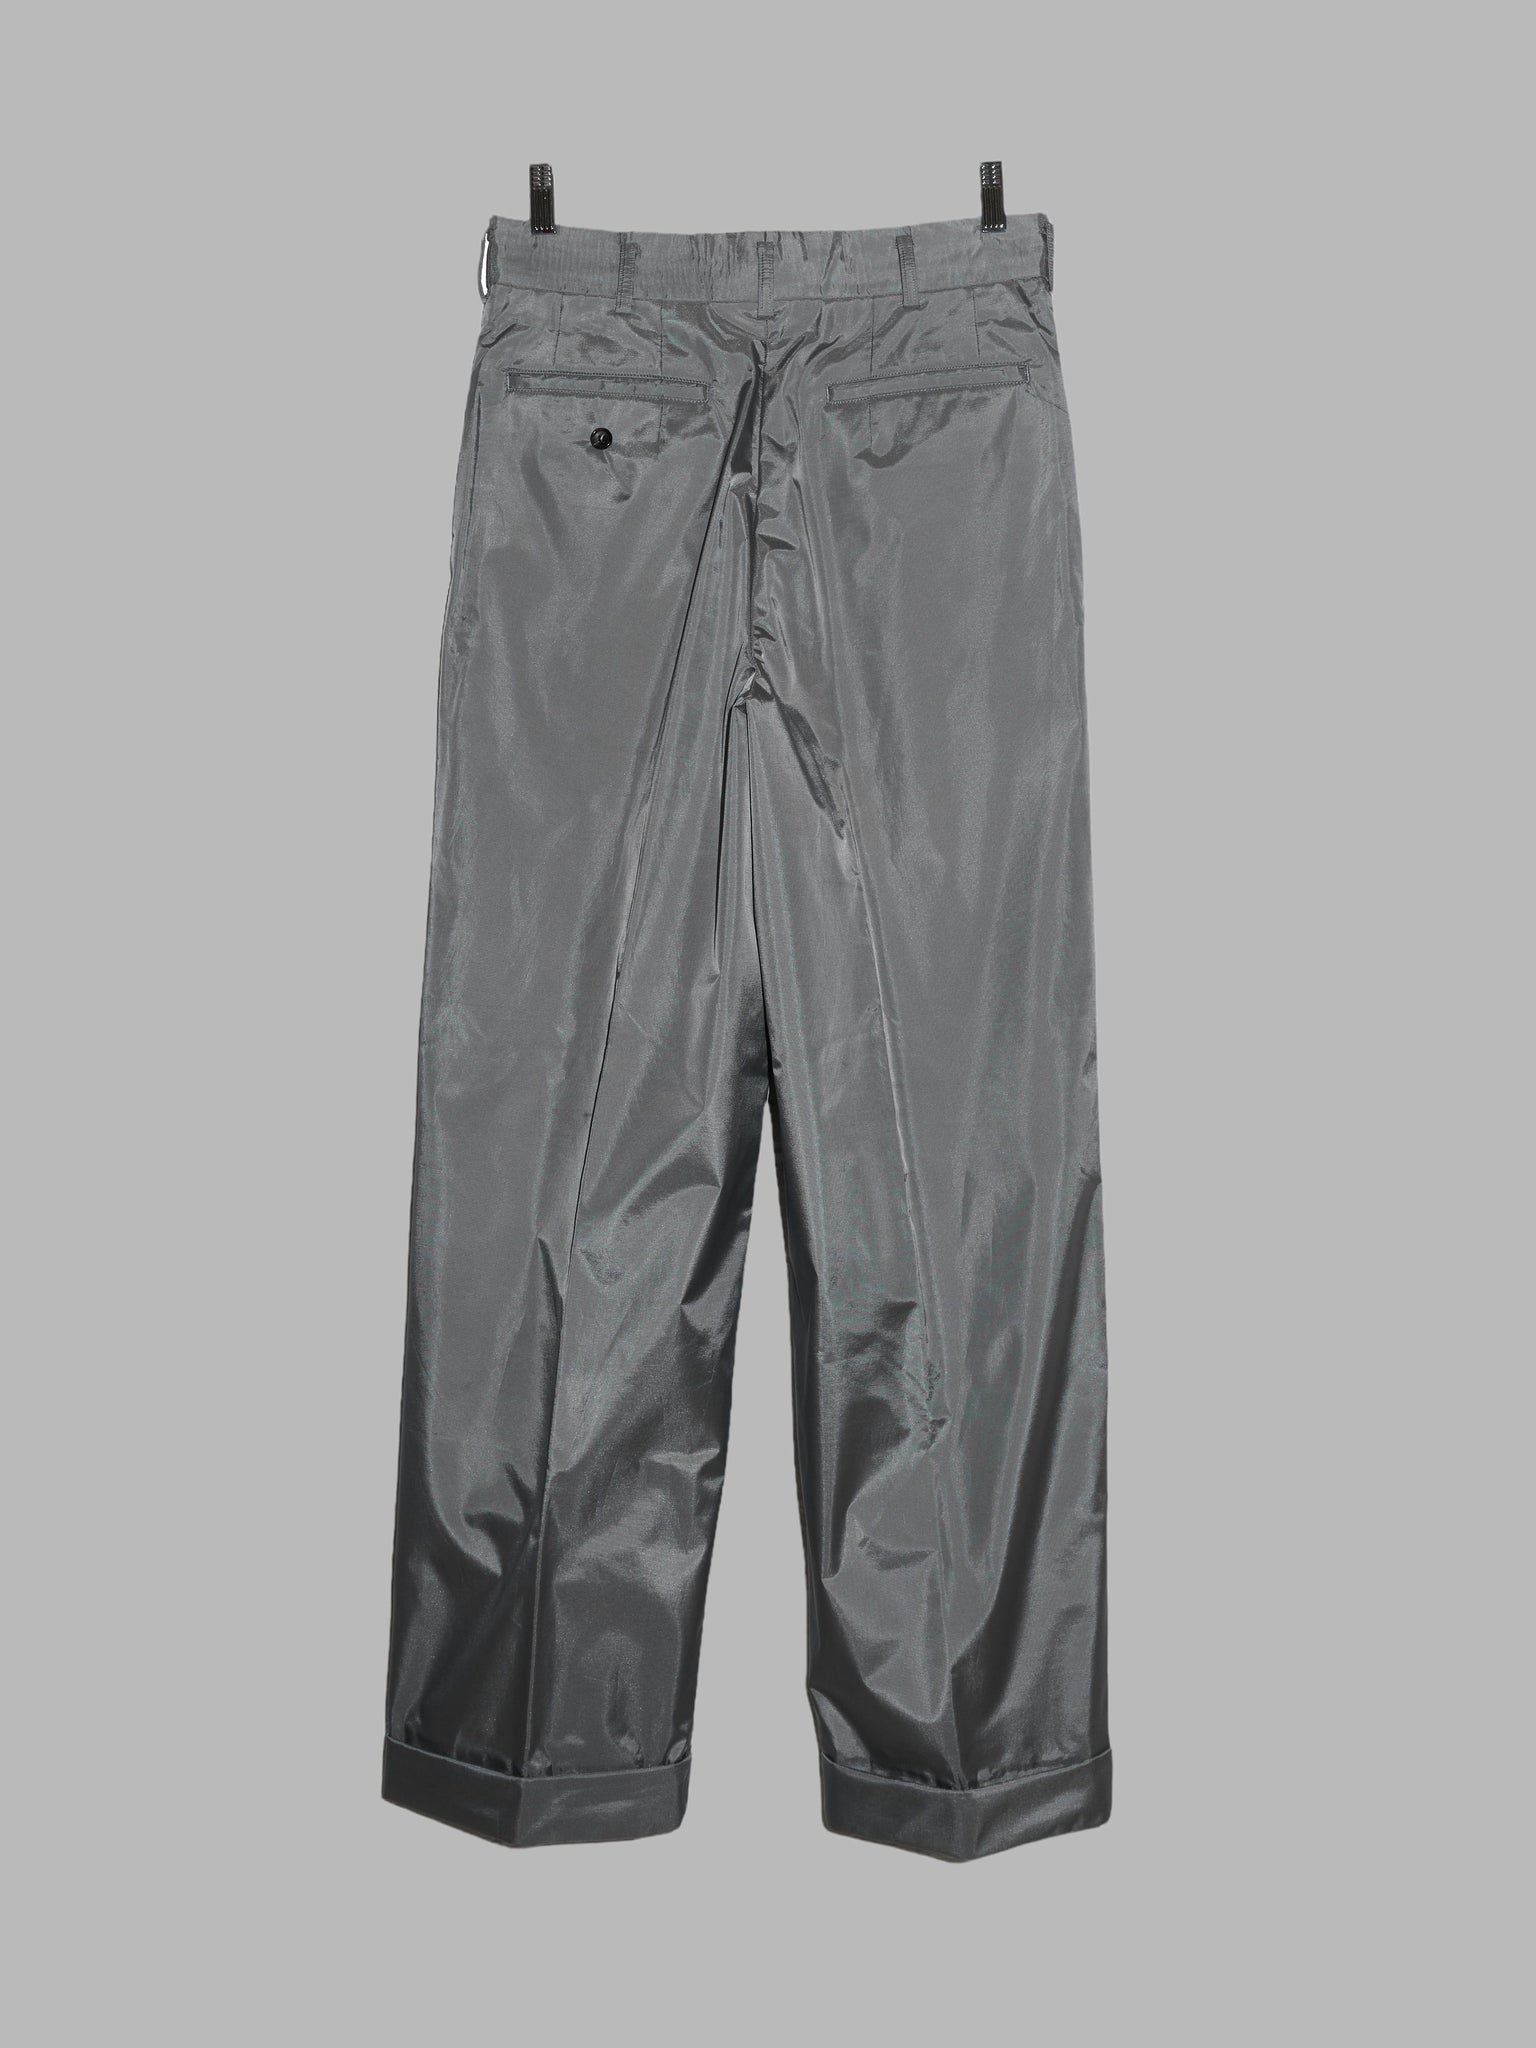 Comme des Garcons Homme 1996 silver pleated wide leg trousers - S